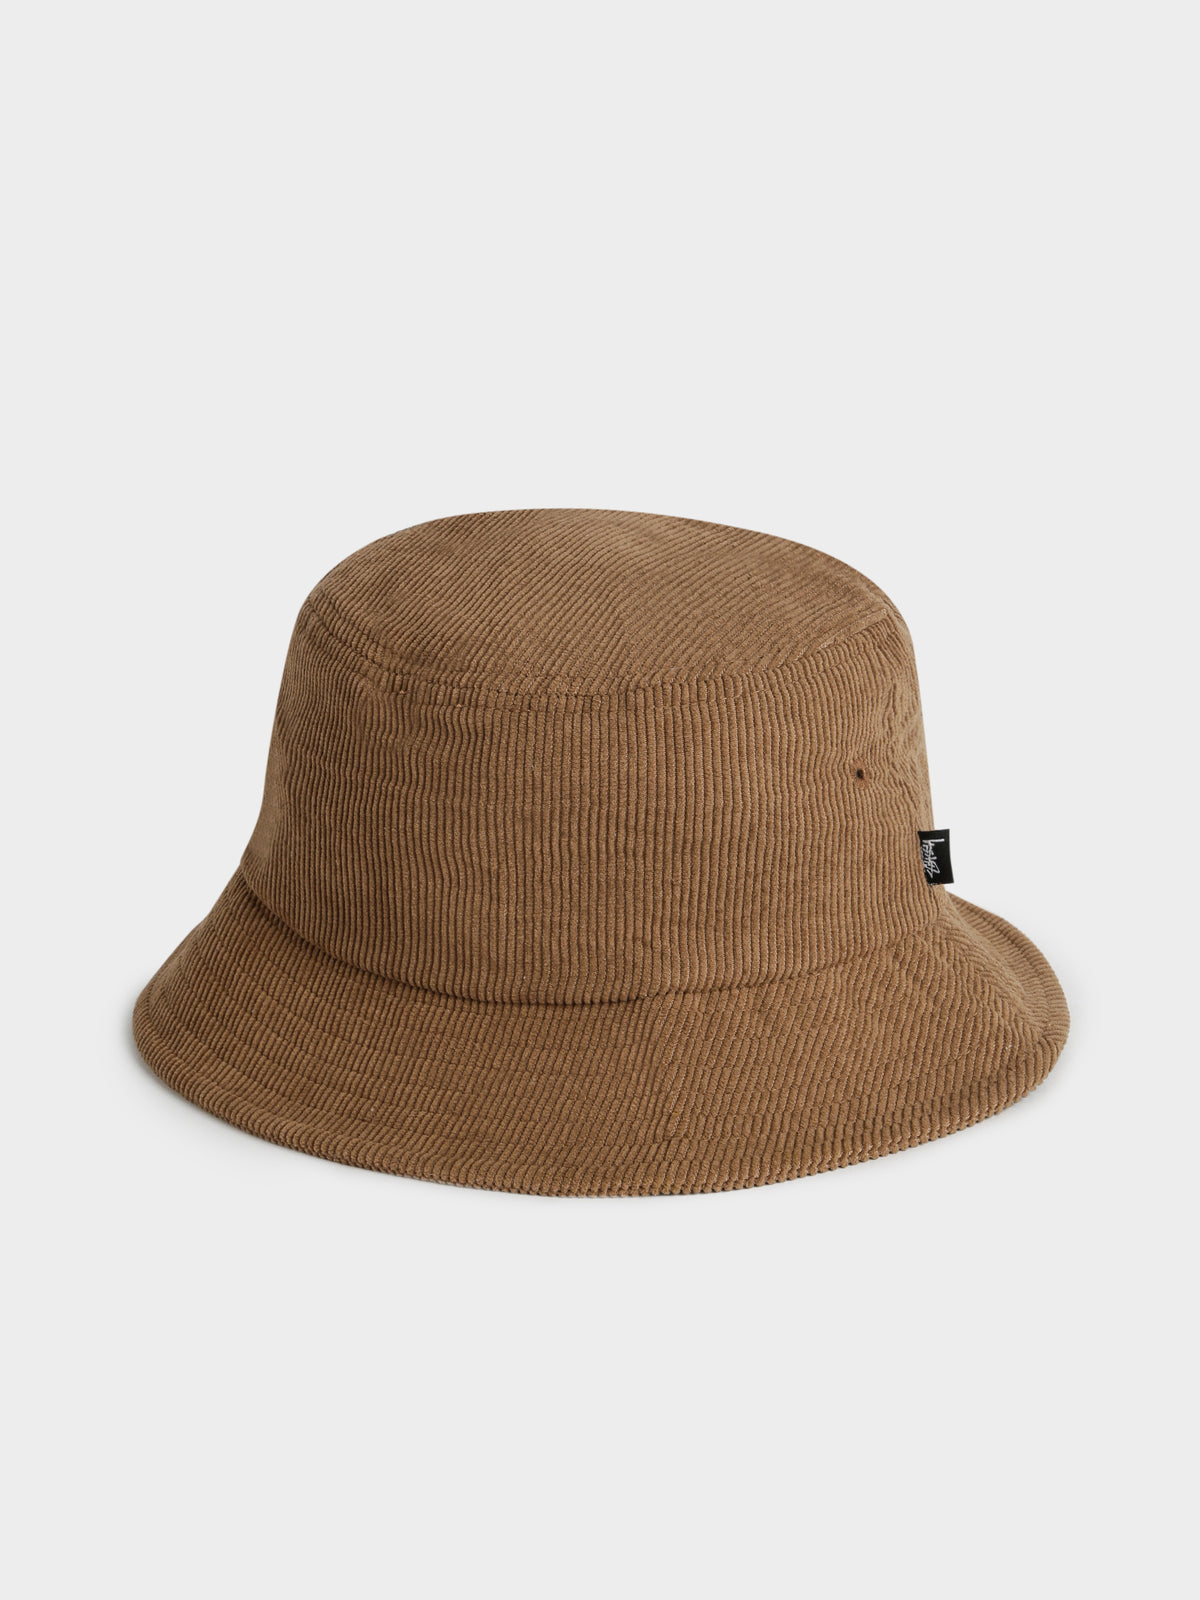 Graffiti Cord Bucket Hat in Brown